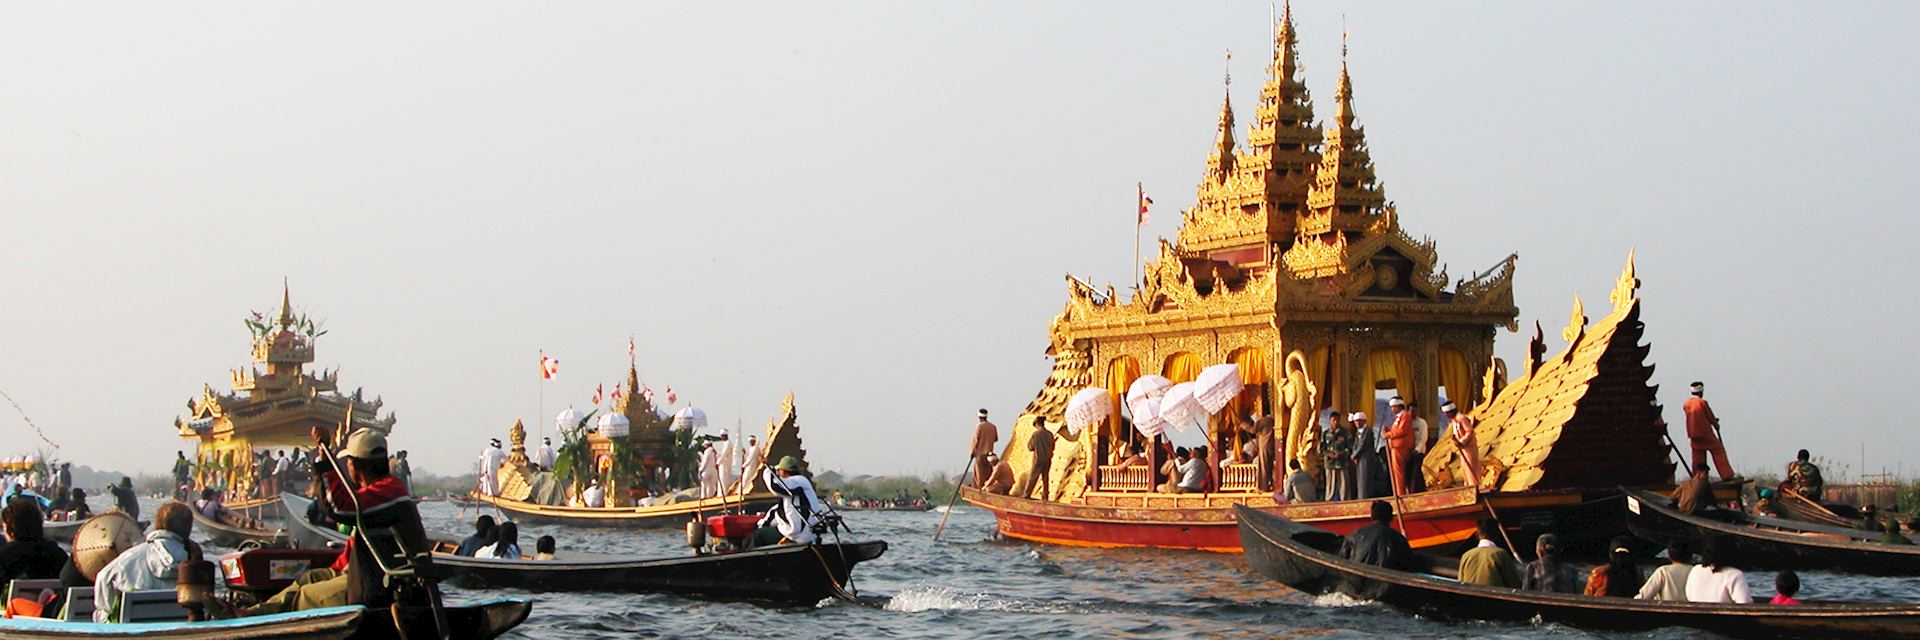 Phaung Daw Oo Pagoda Festival, Myanmar